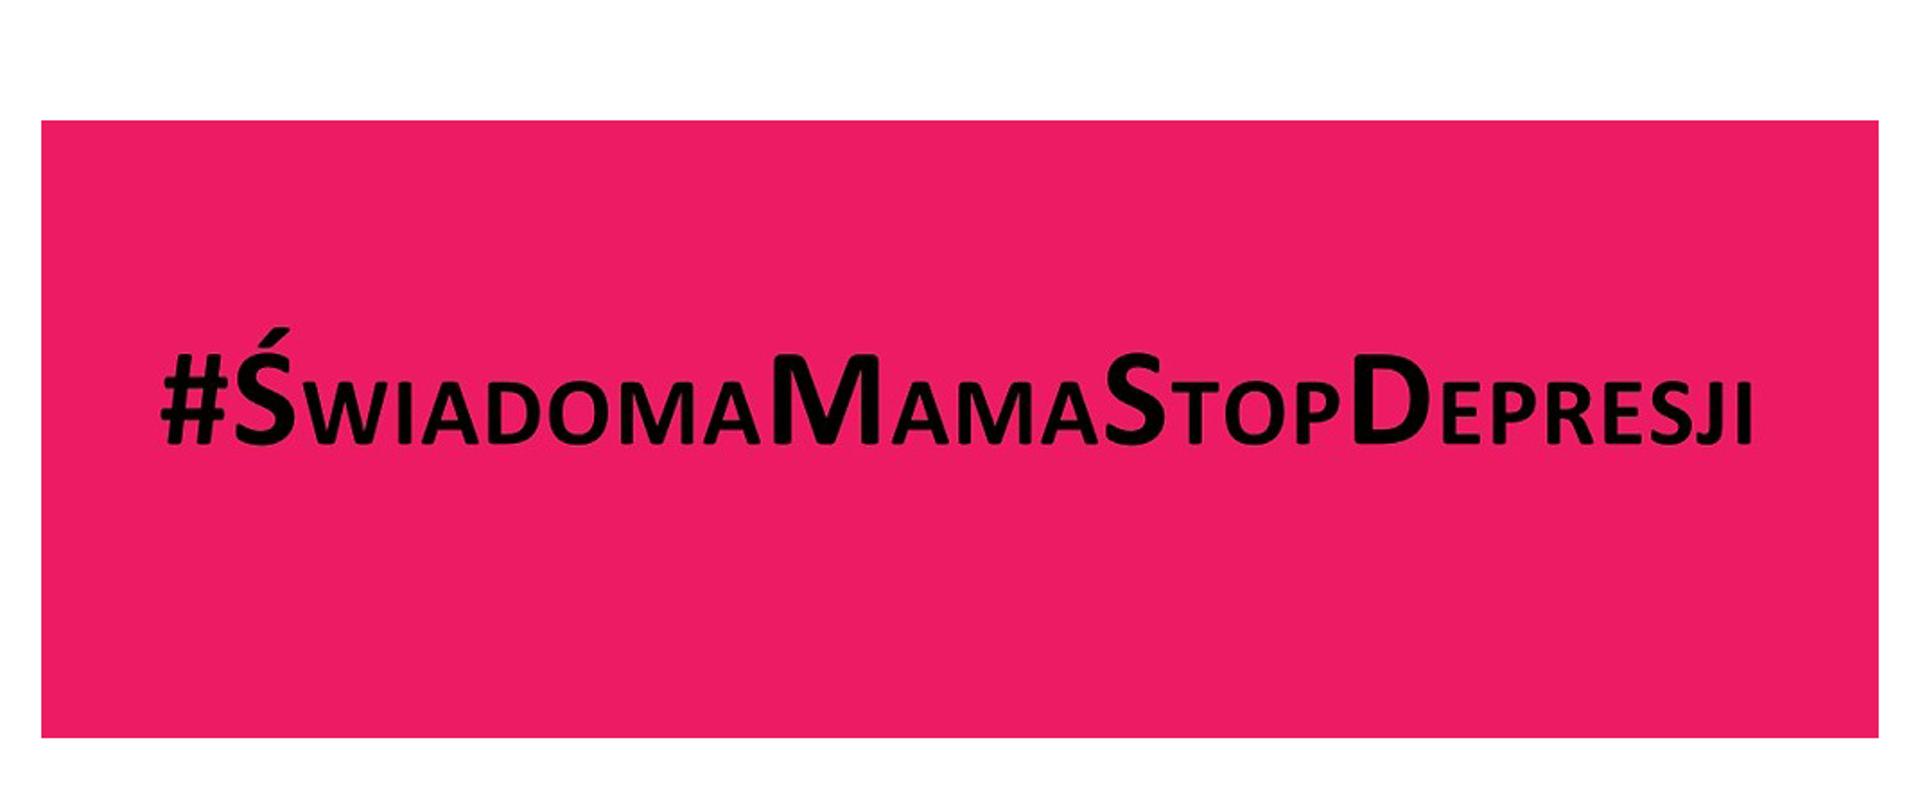 Świadoma Mama - Stop Depresji 